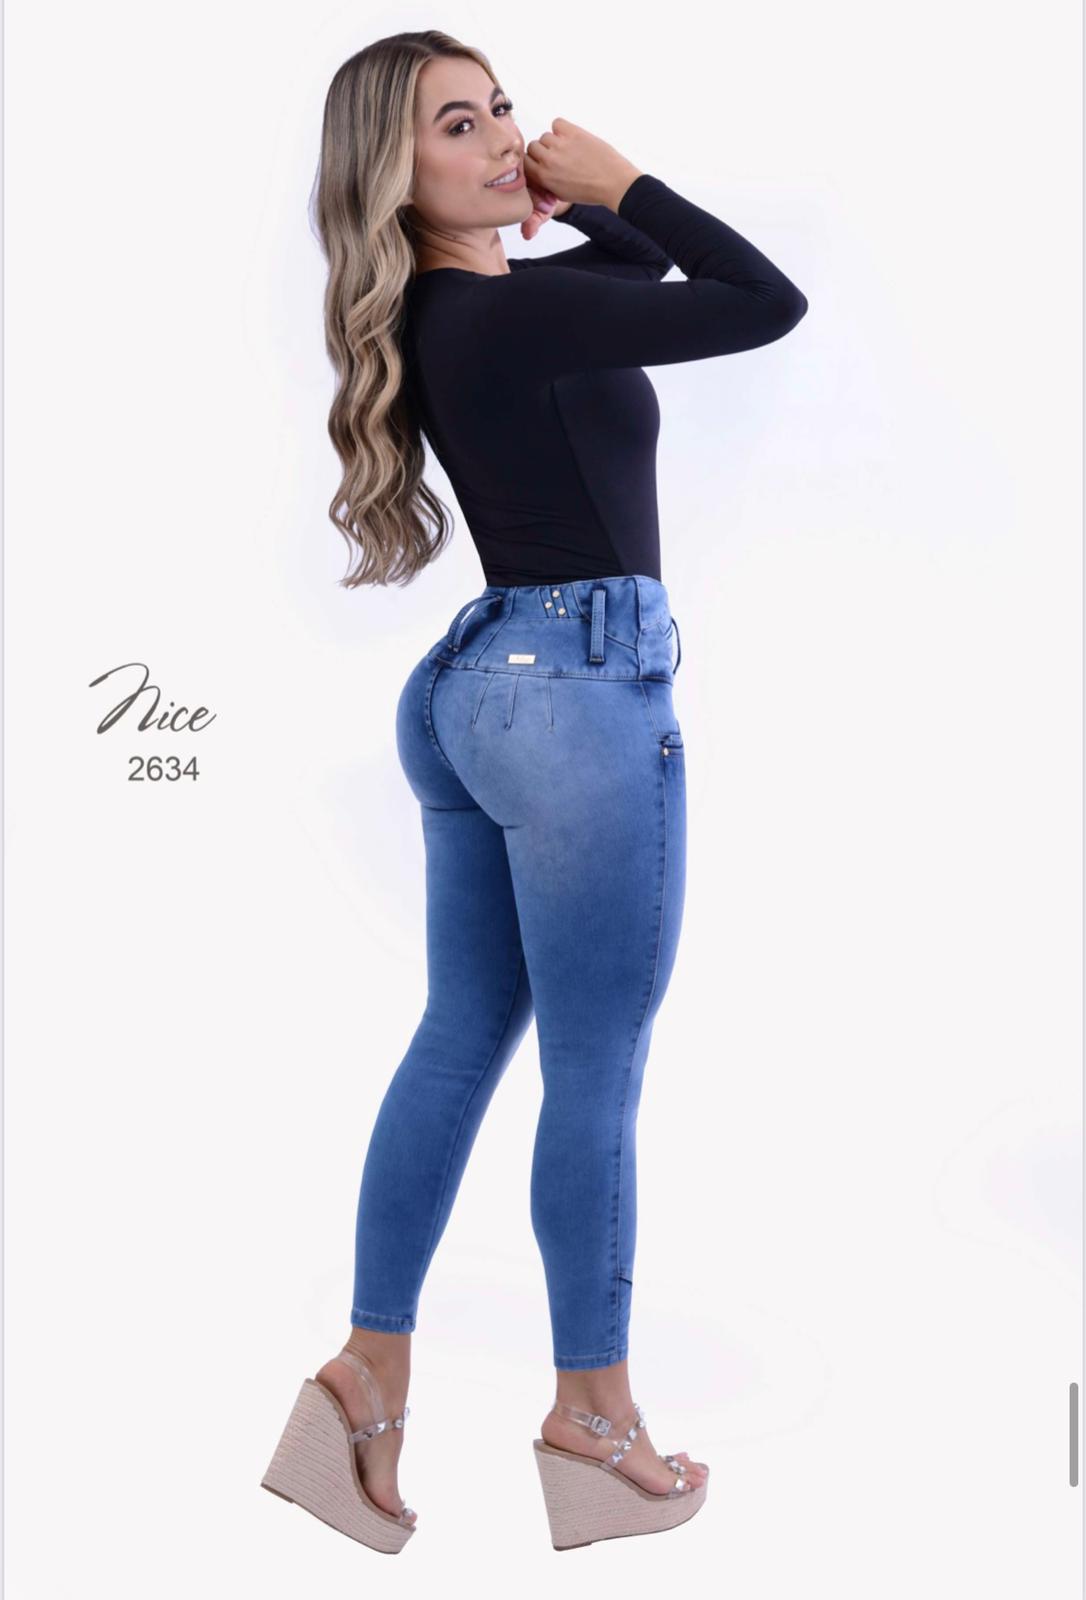 Ondine's Colombian Jeans Levantacola